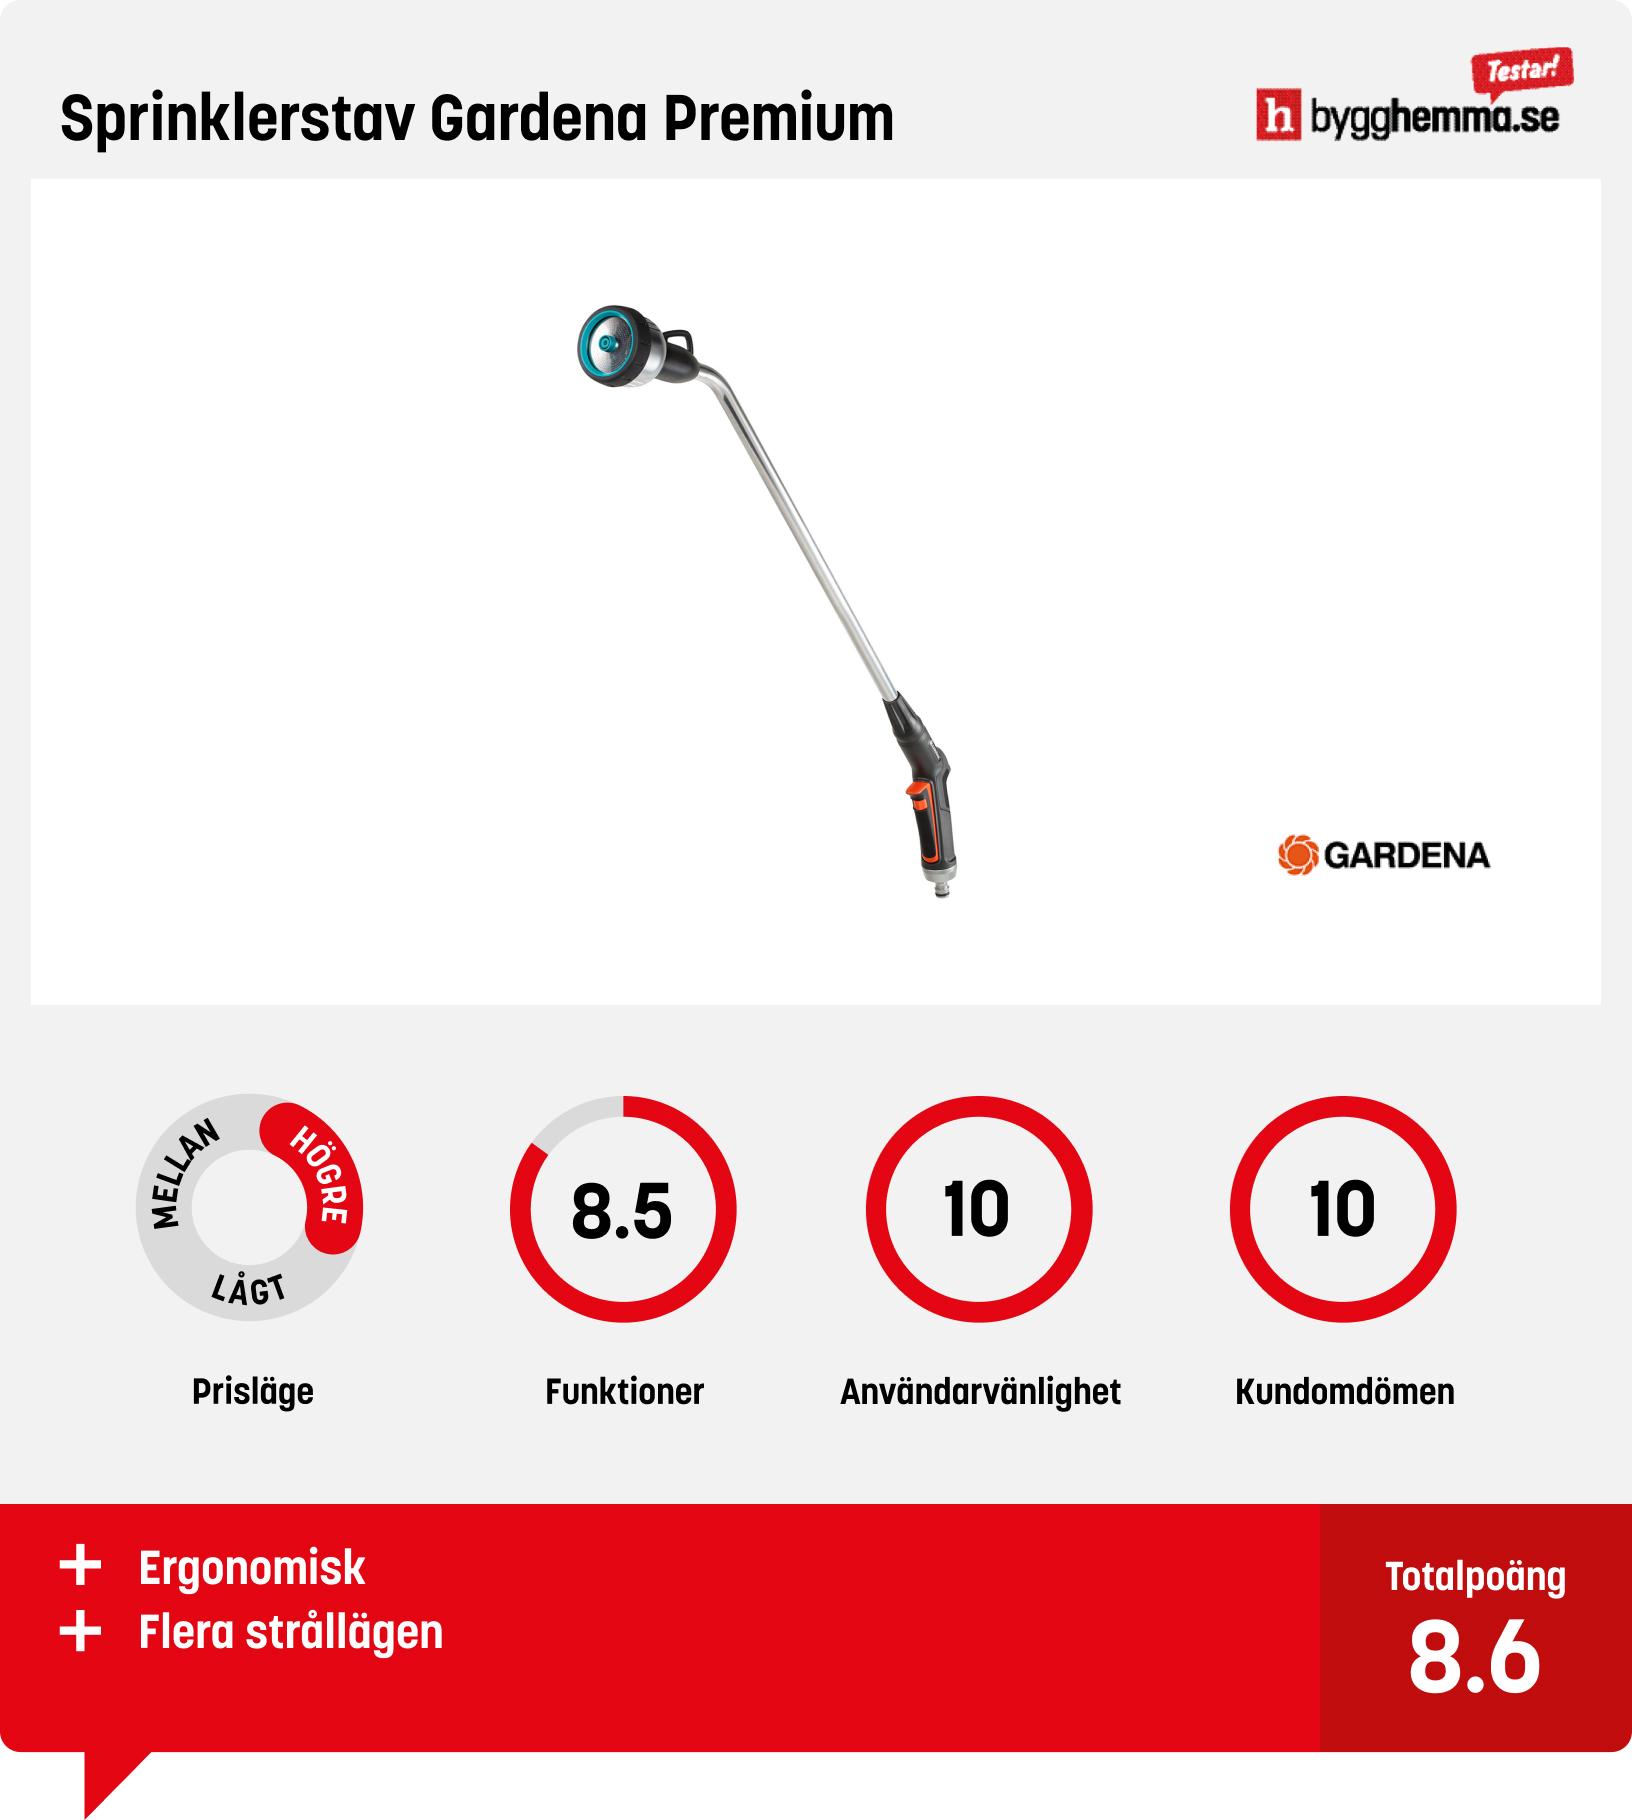 Sprinklerpstol bäst i test - Sprinklerstav Gardena Premium